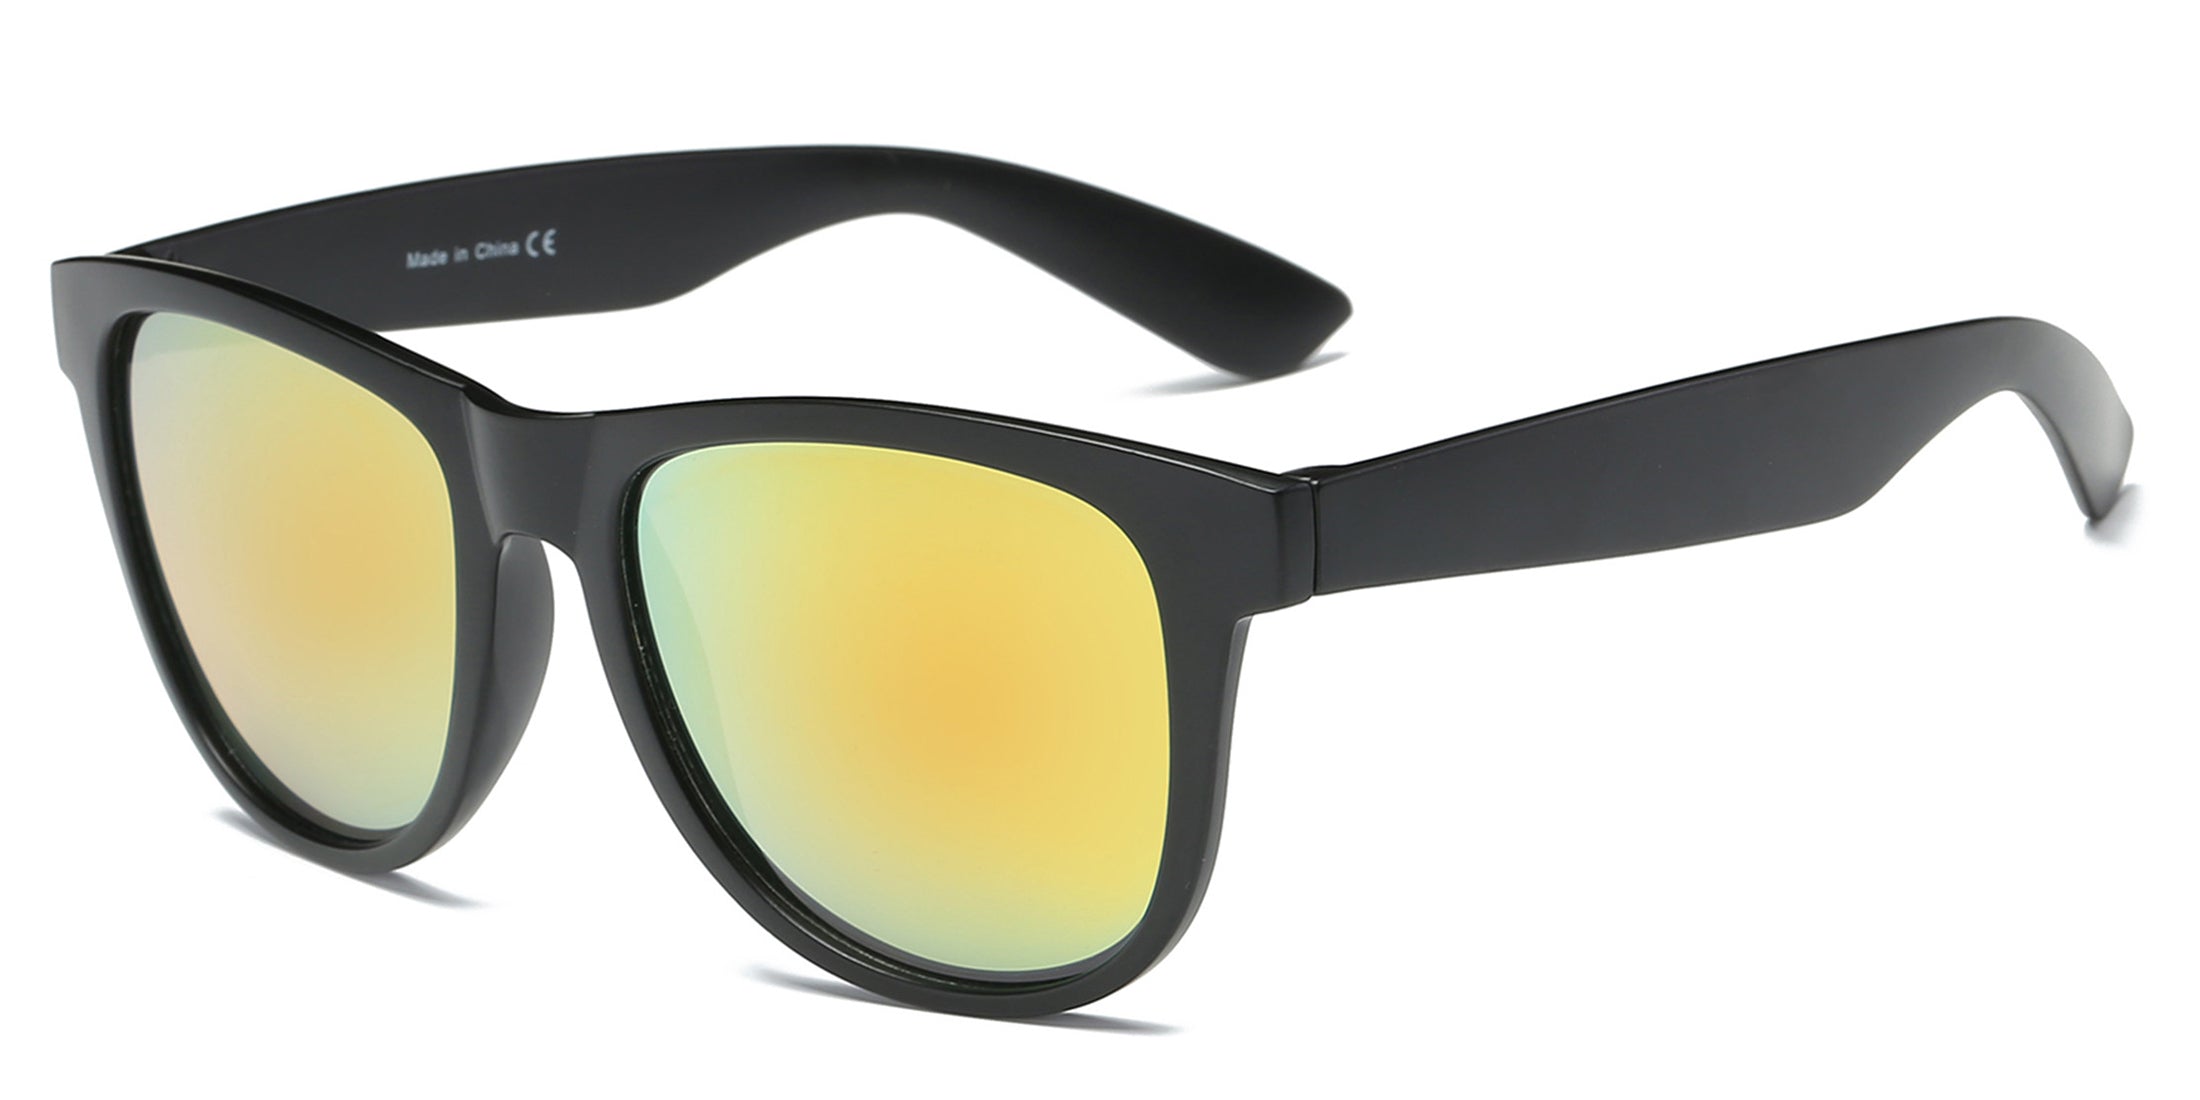 S1031 - Retro VINTAGE Round Shape Mirrored Sunglasses Black / Yellow